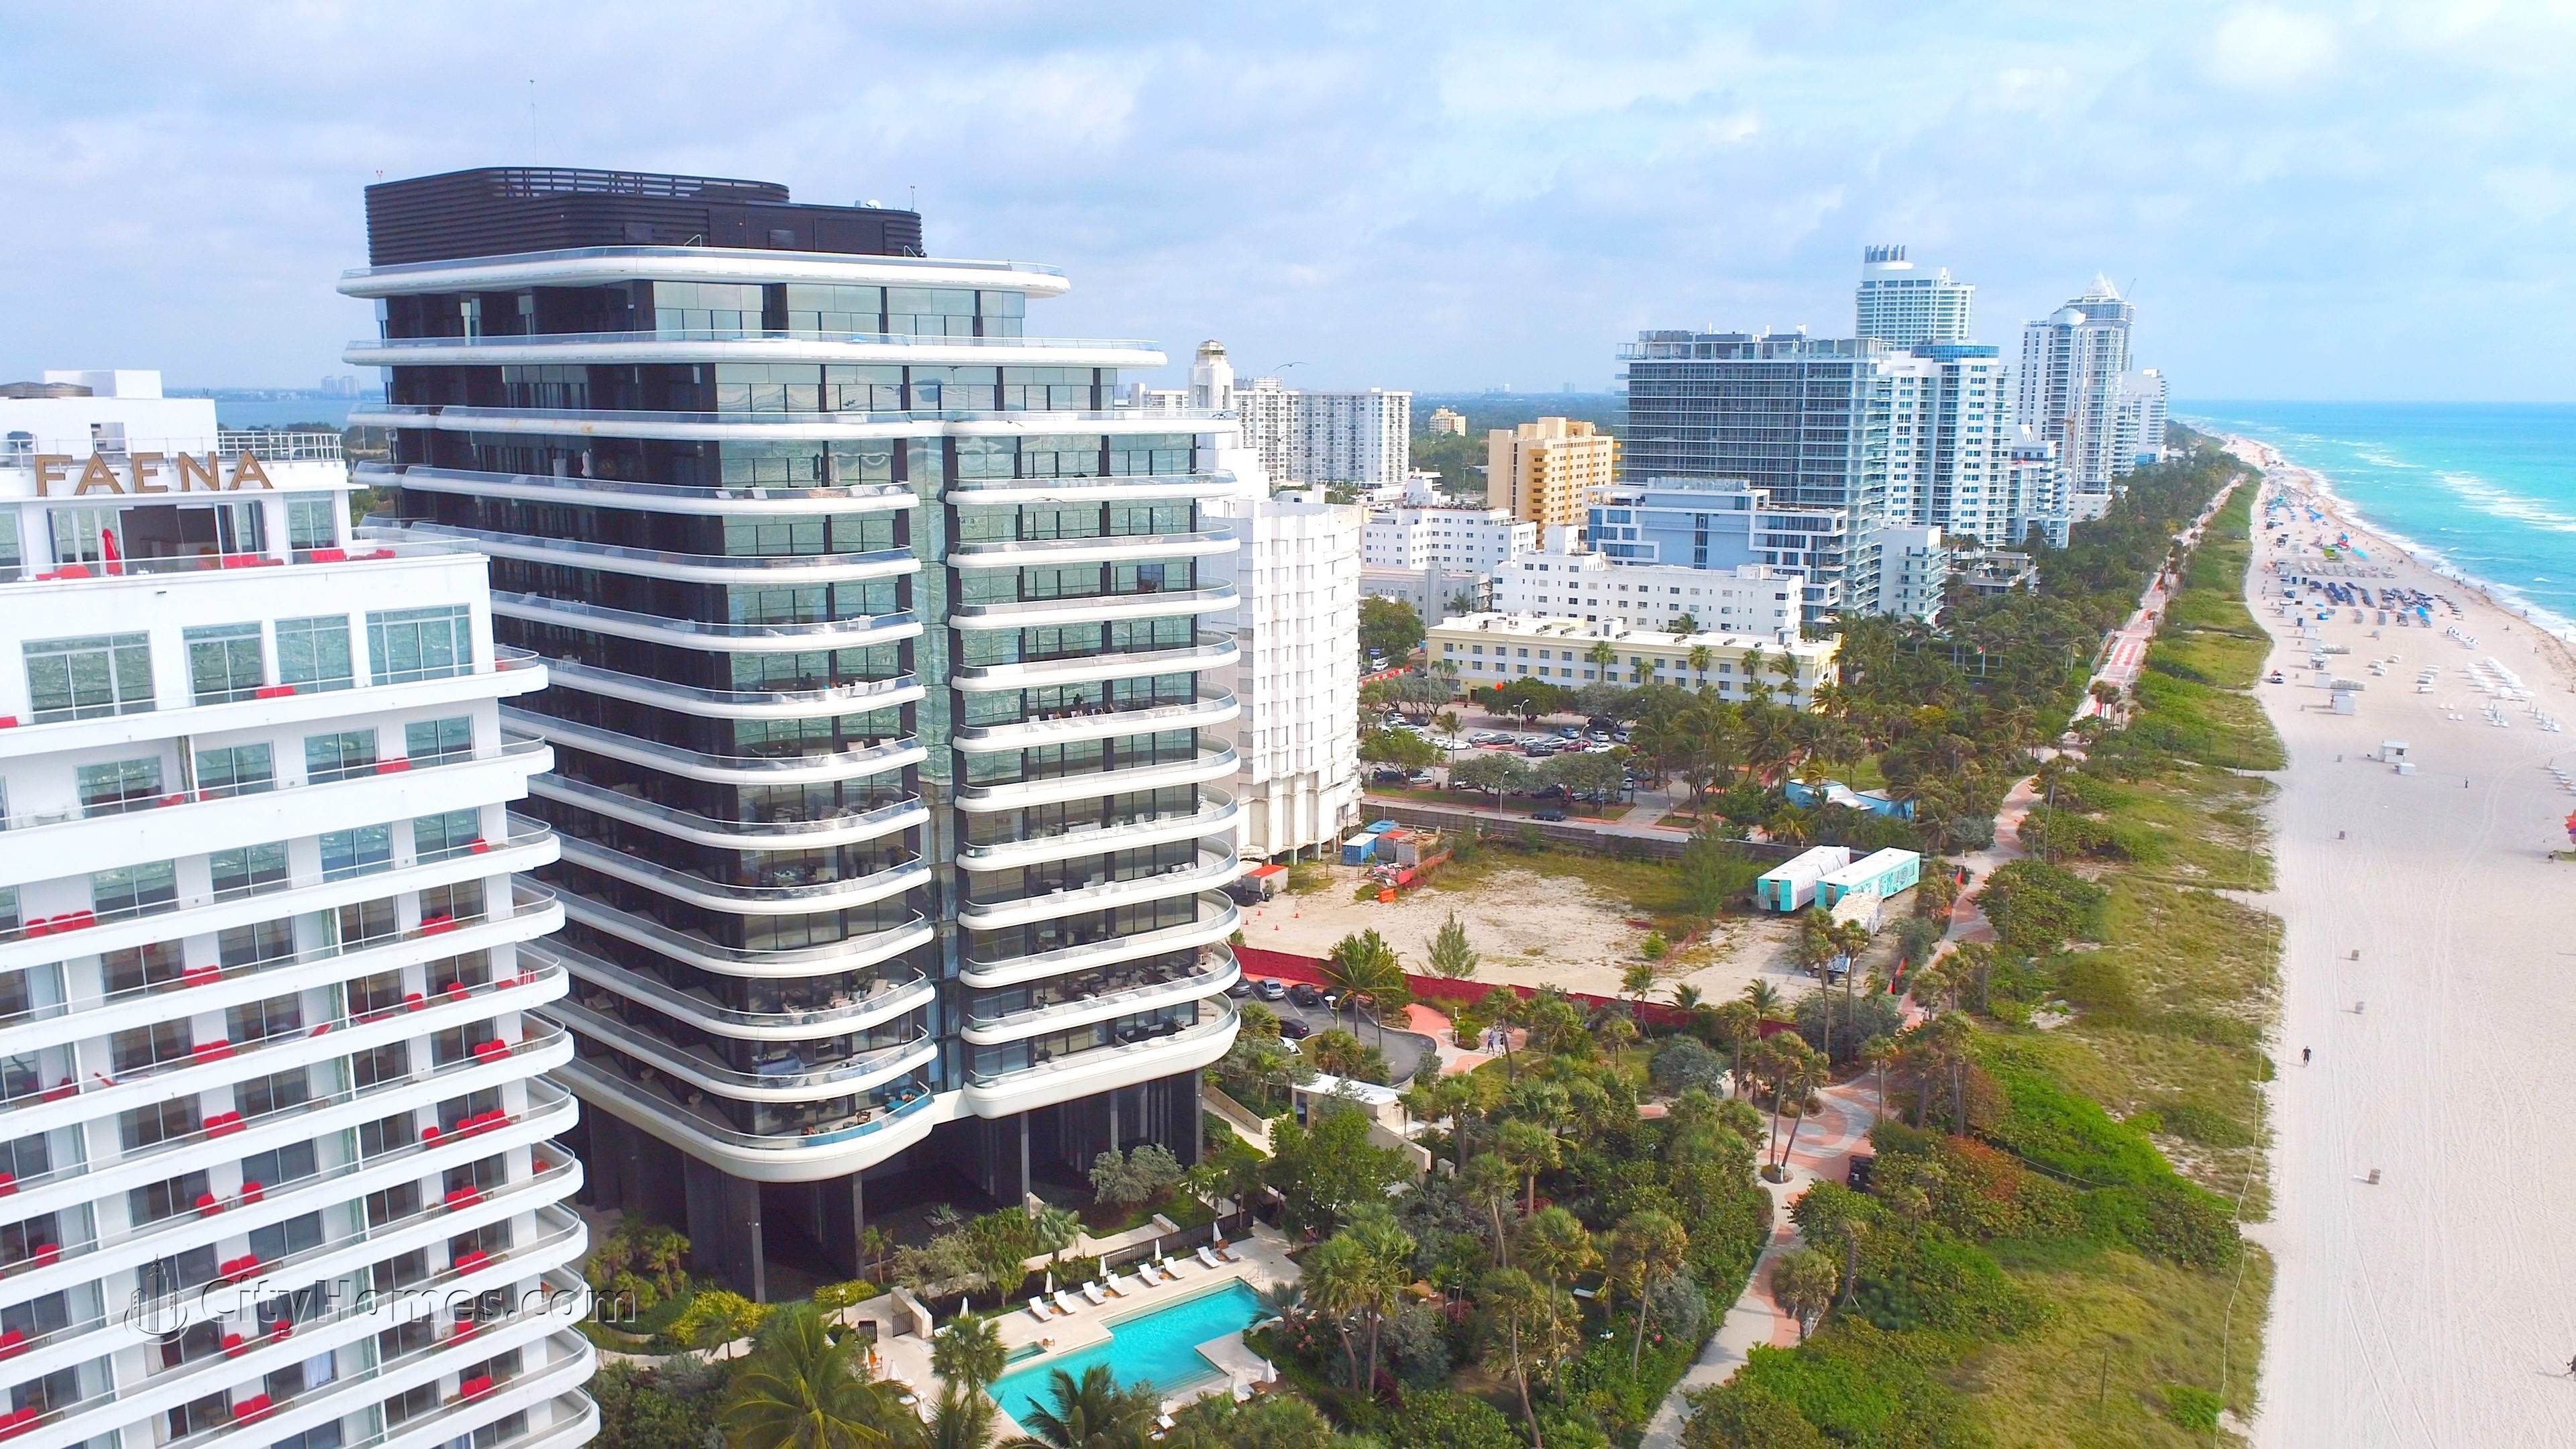 FAENA HOUSE MIAMI BEACH Gebäude bei 3315 Collins Avenue, Mid Beach, Miami Beach, FL 33140